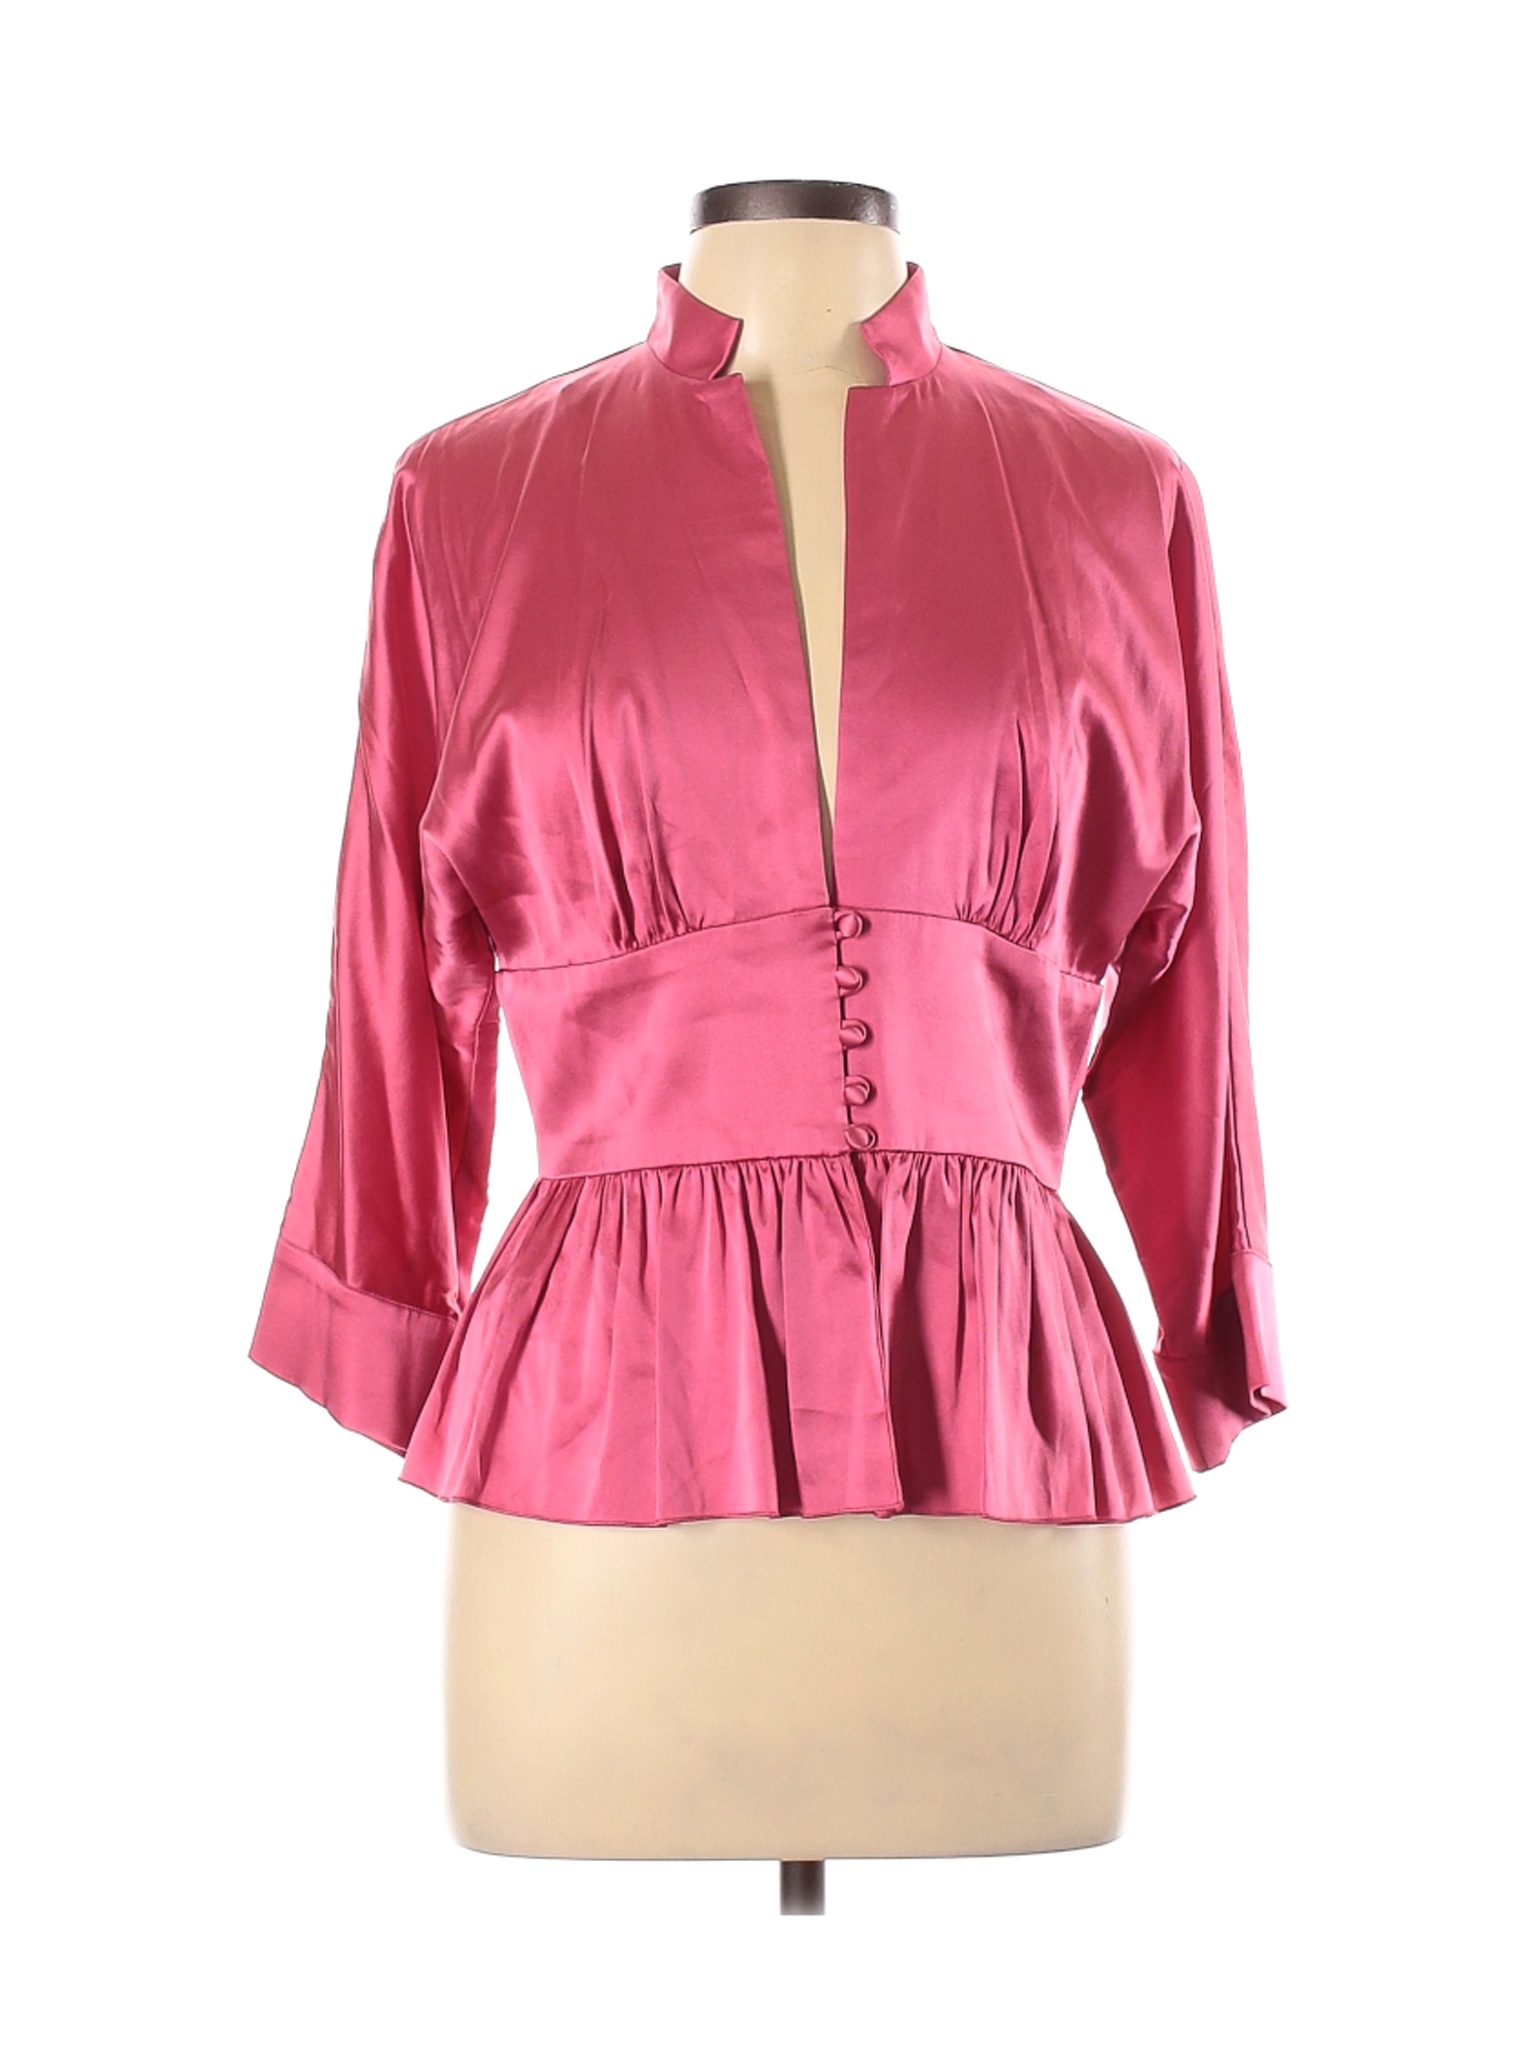 Trina Turk Women Pink 3/4 Sleeve Blouse L | eBay